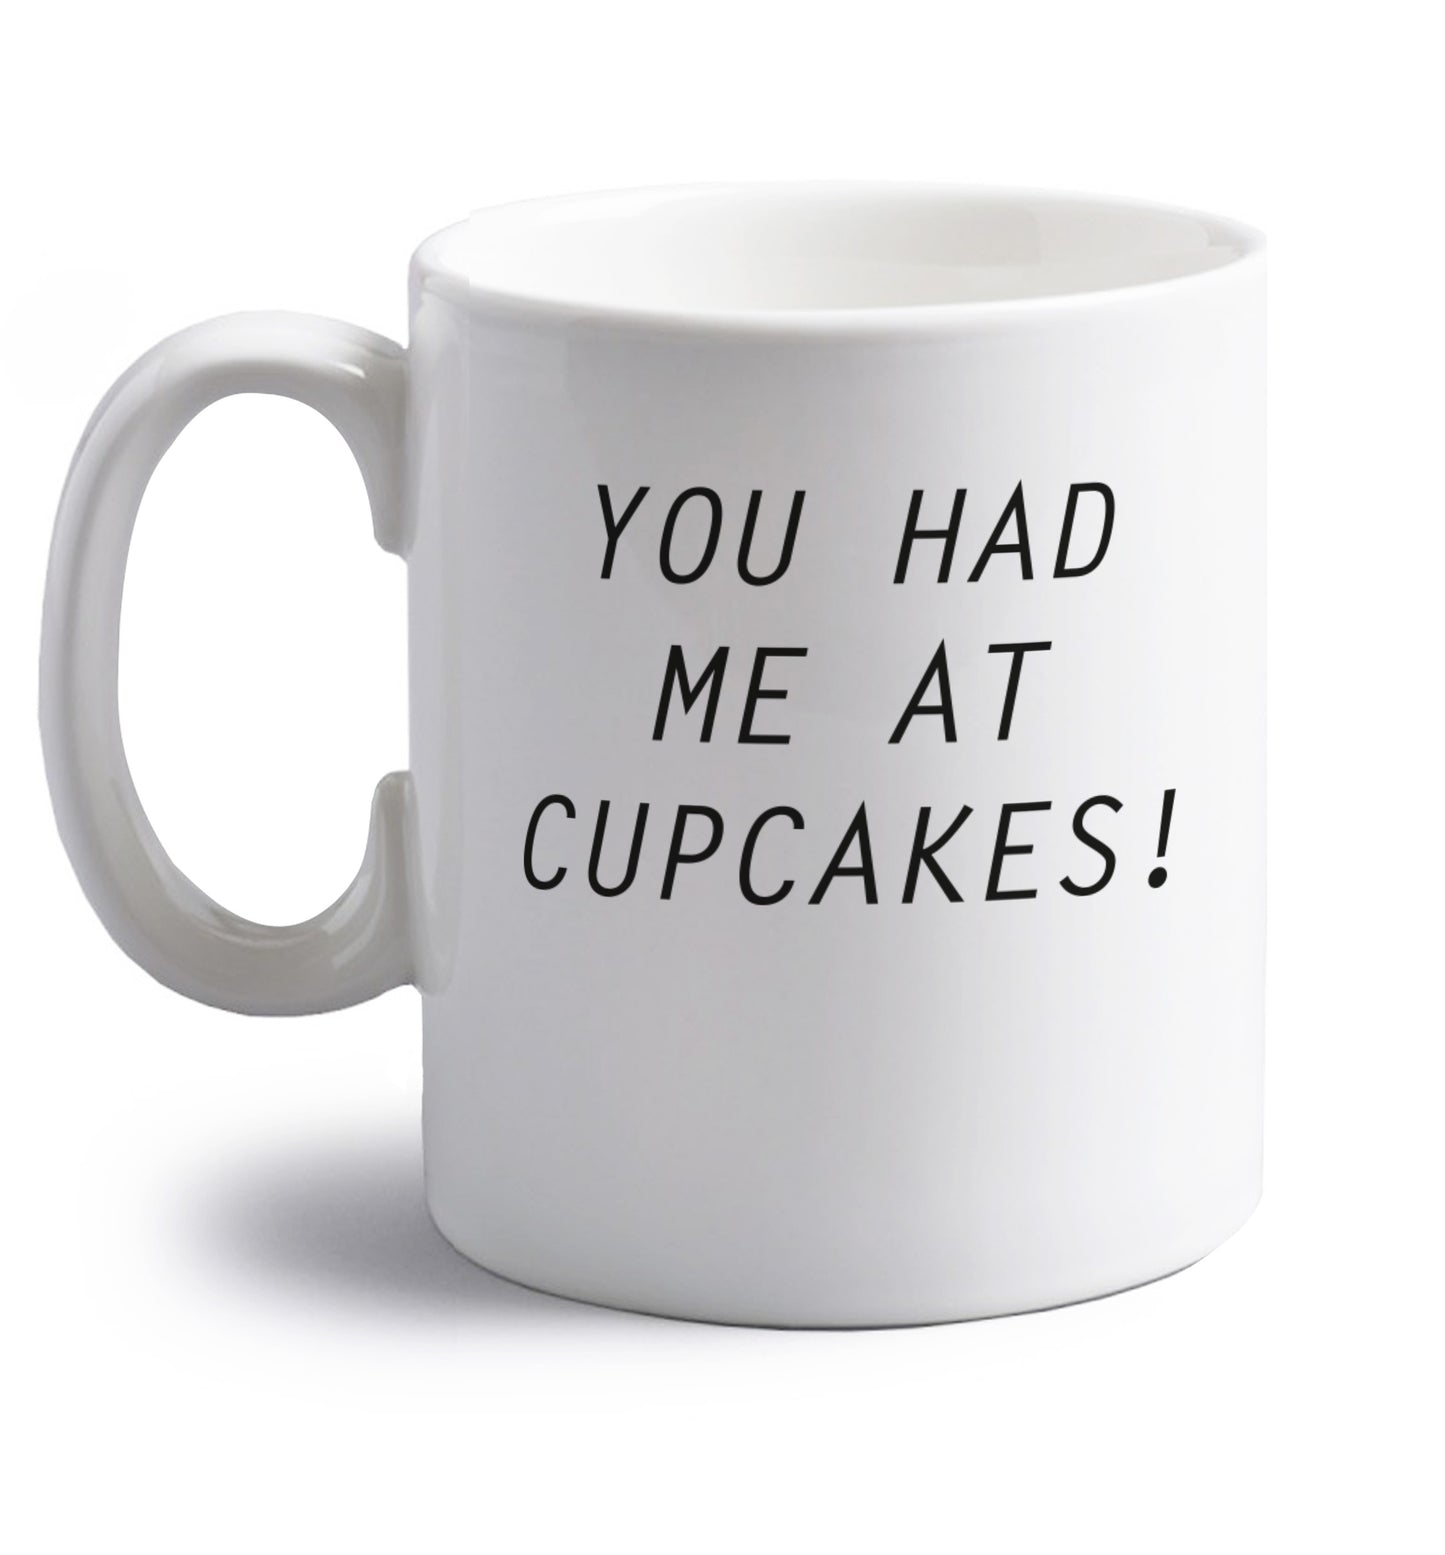 You had me at cupcakes right handed white ceramic mug 